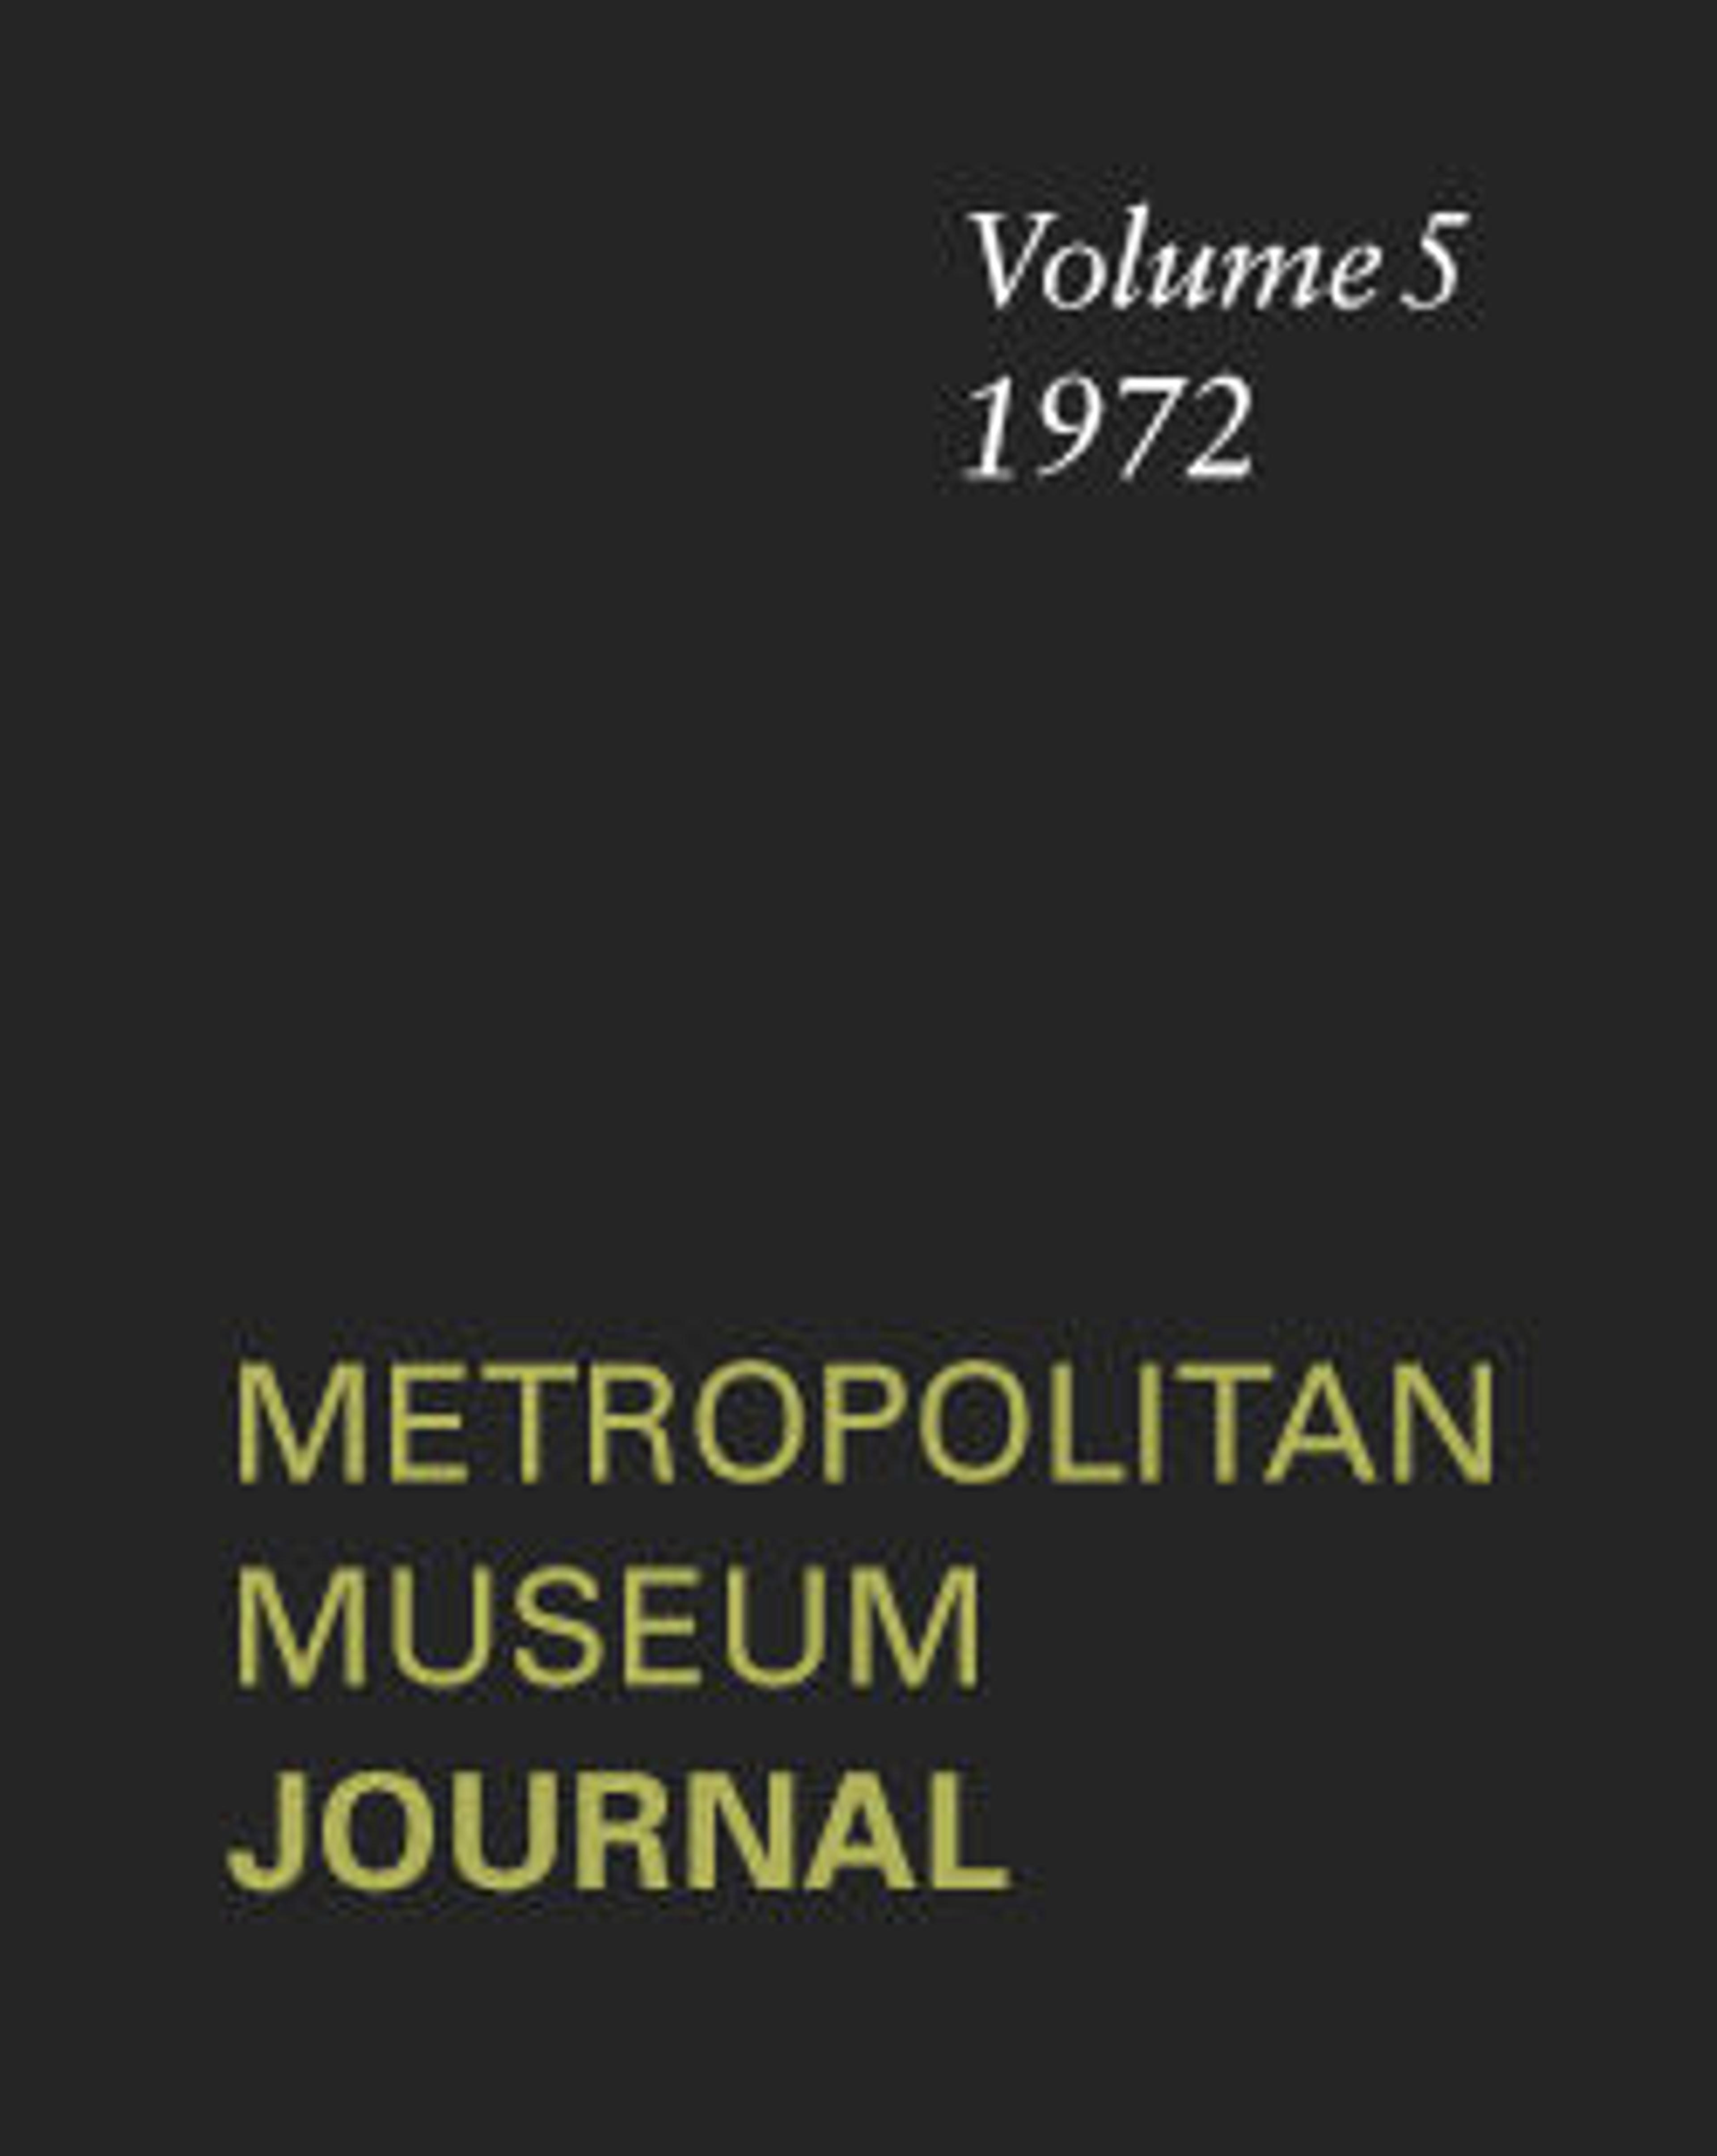 The Metropolitan Museum Journal, v. 5 (1972)